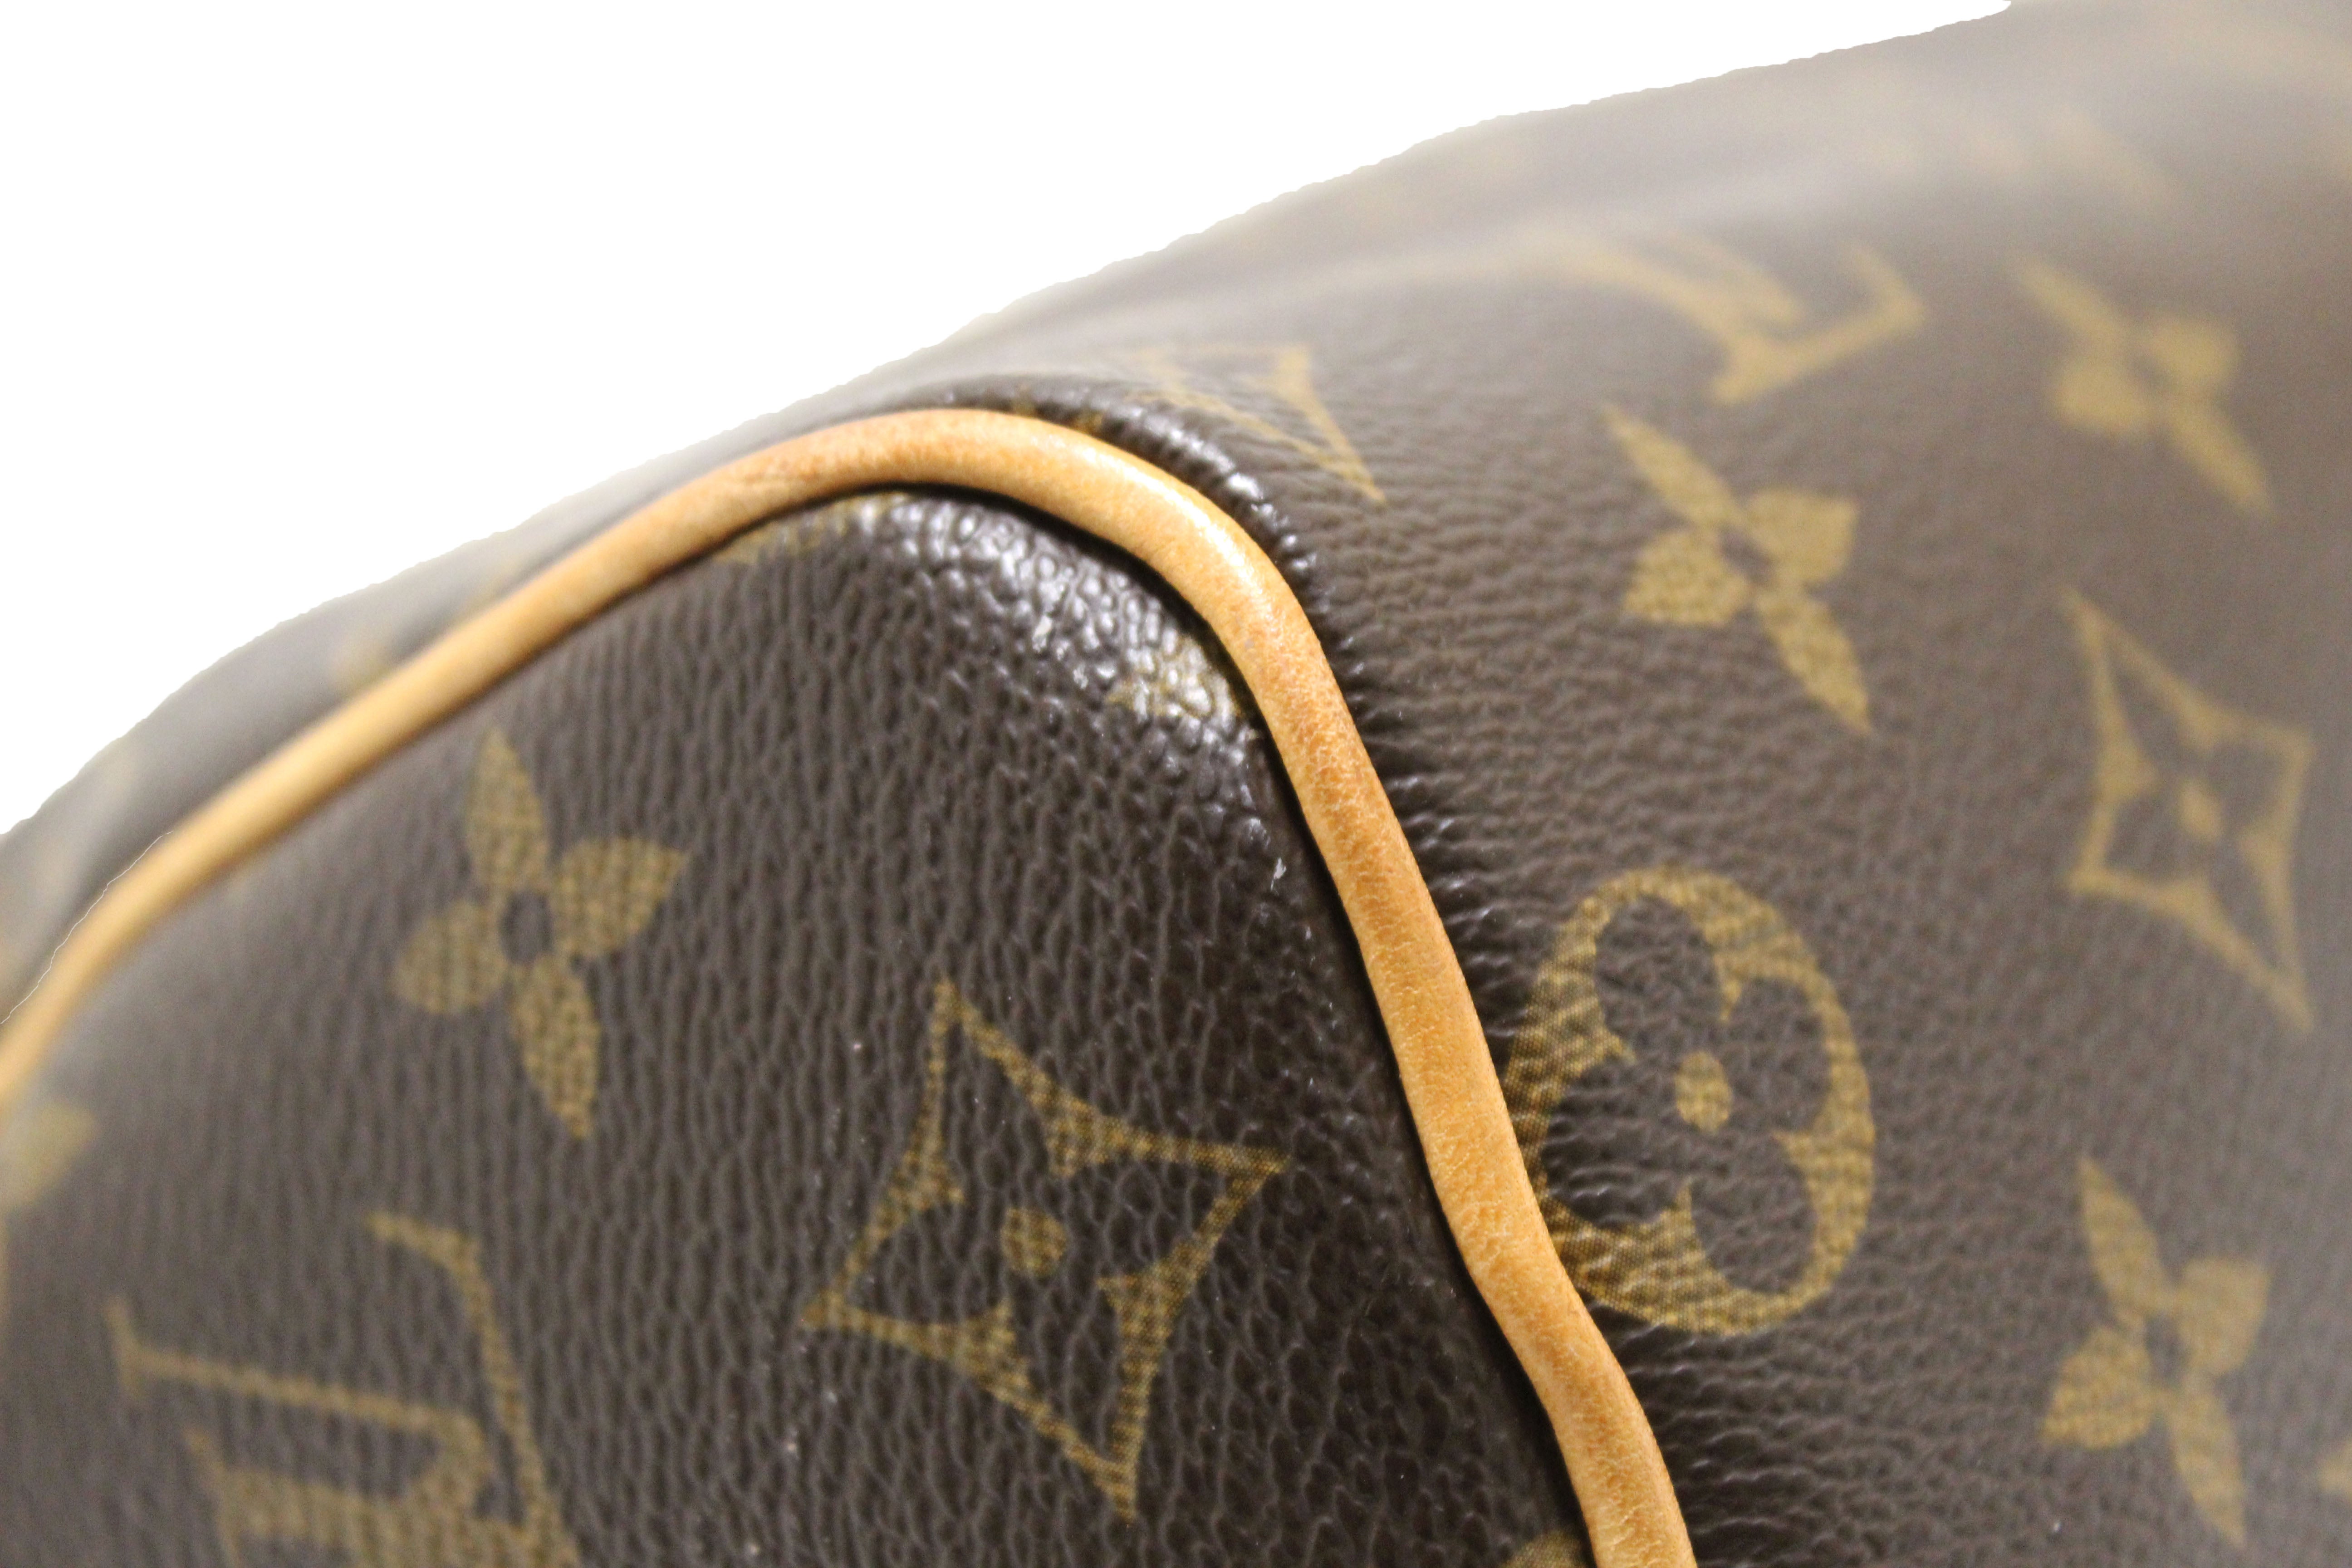 Louis Vuitton Speedy 25 Monogram Bag – Vanilla Vintage